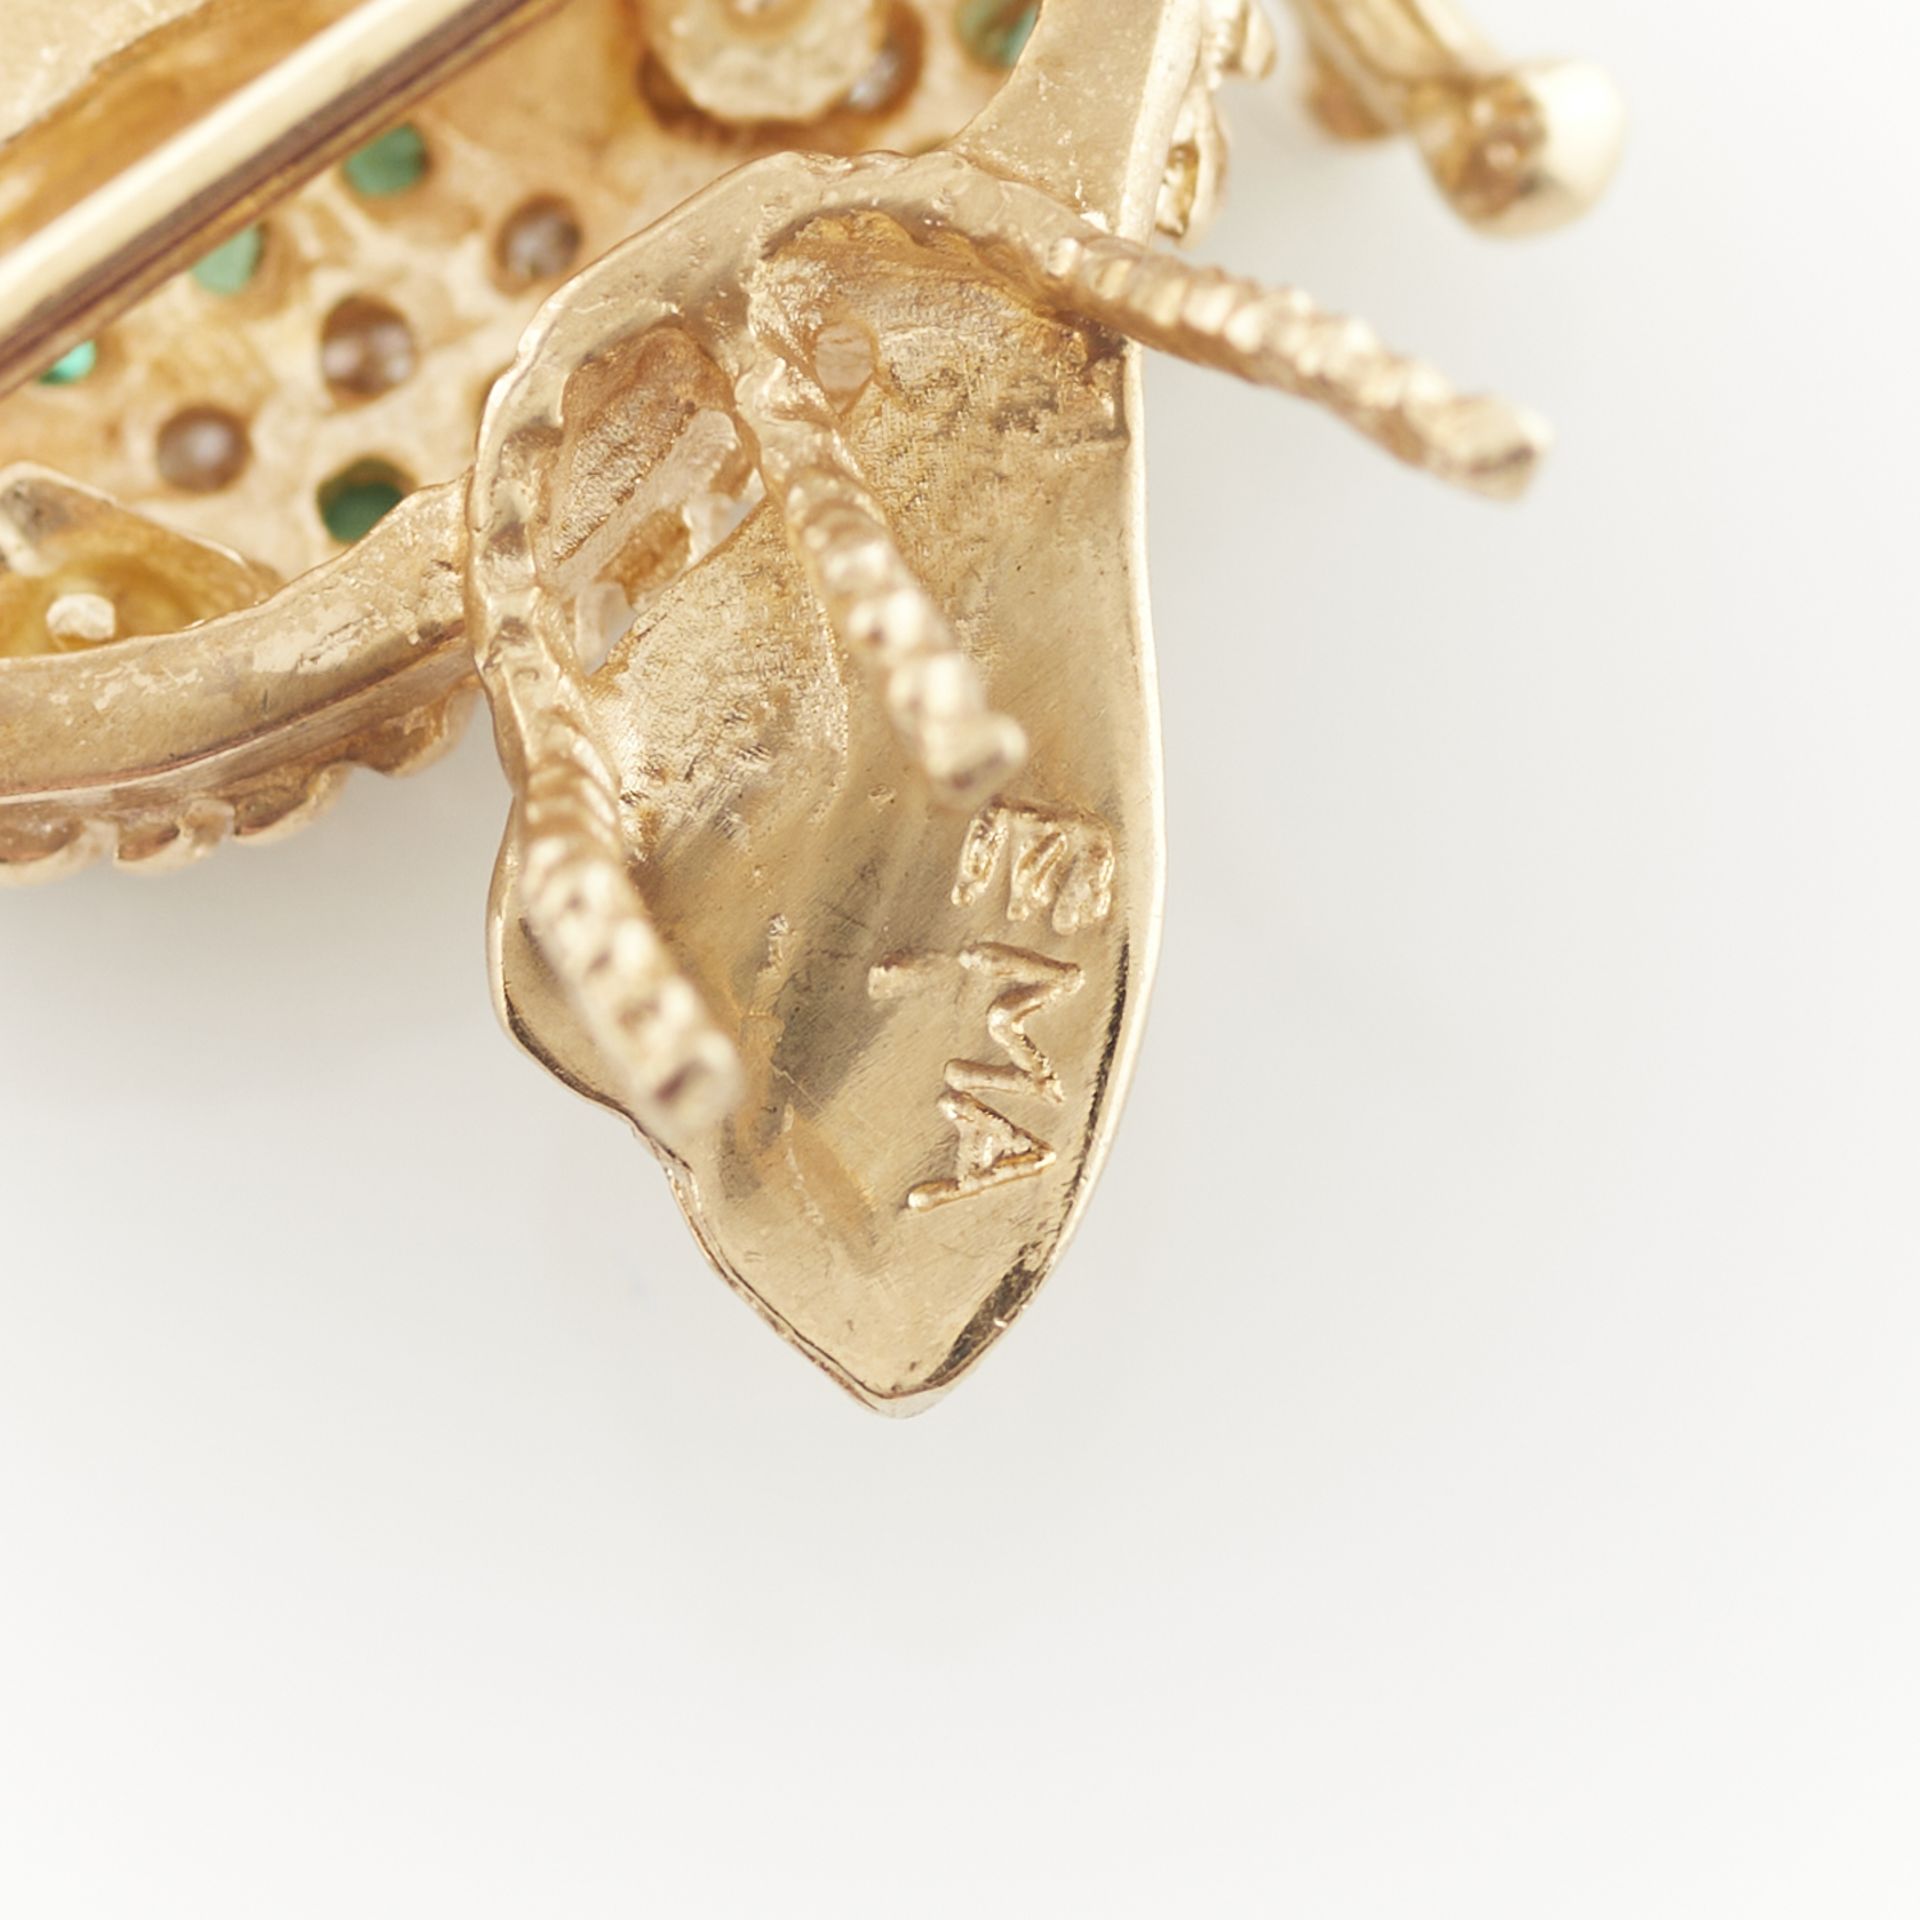 EMA 14k Yellow Gold, Diamond, & Emerald Fly Brooch - Image 6 of 7